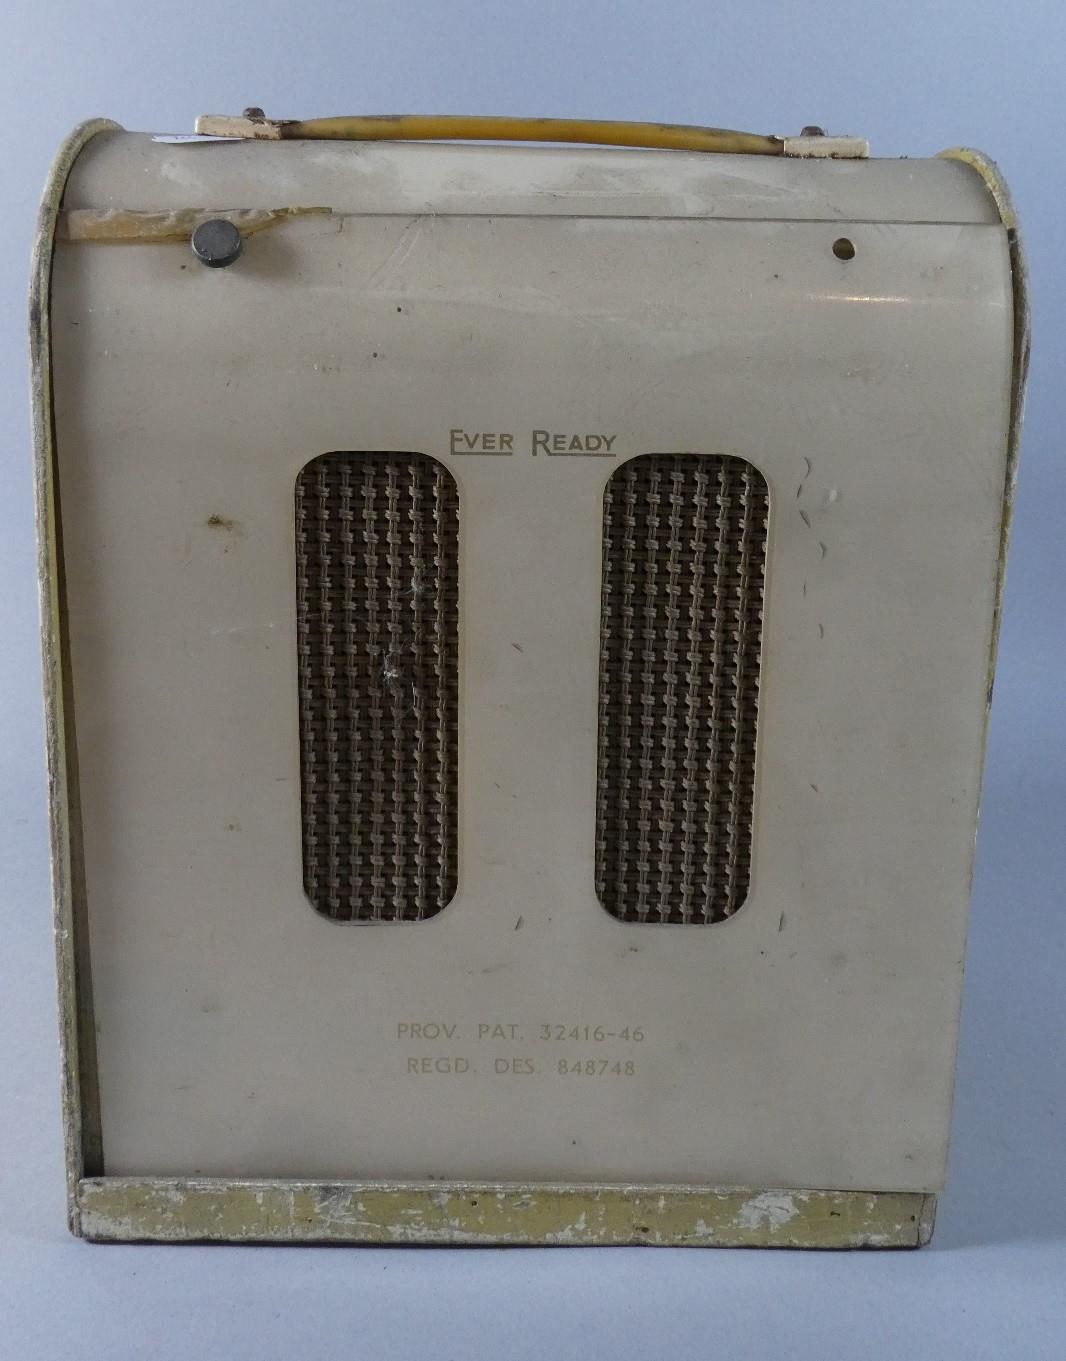 A Vintage Radio, 33cm high - Image 3 of 3